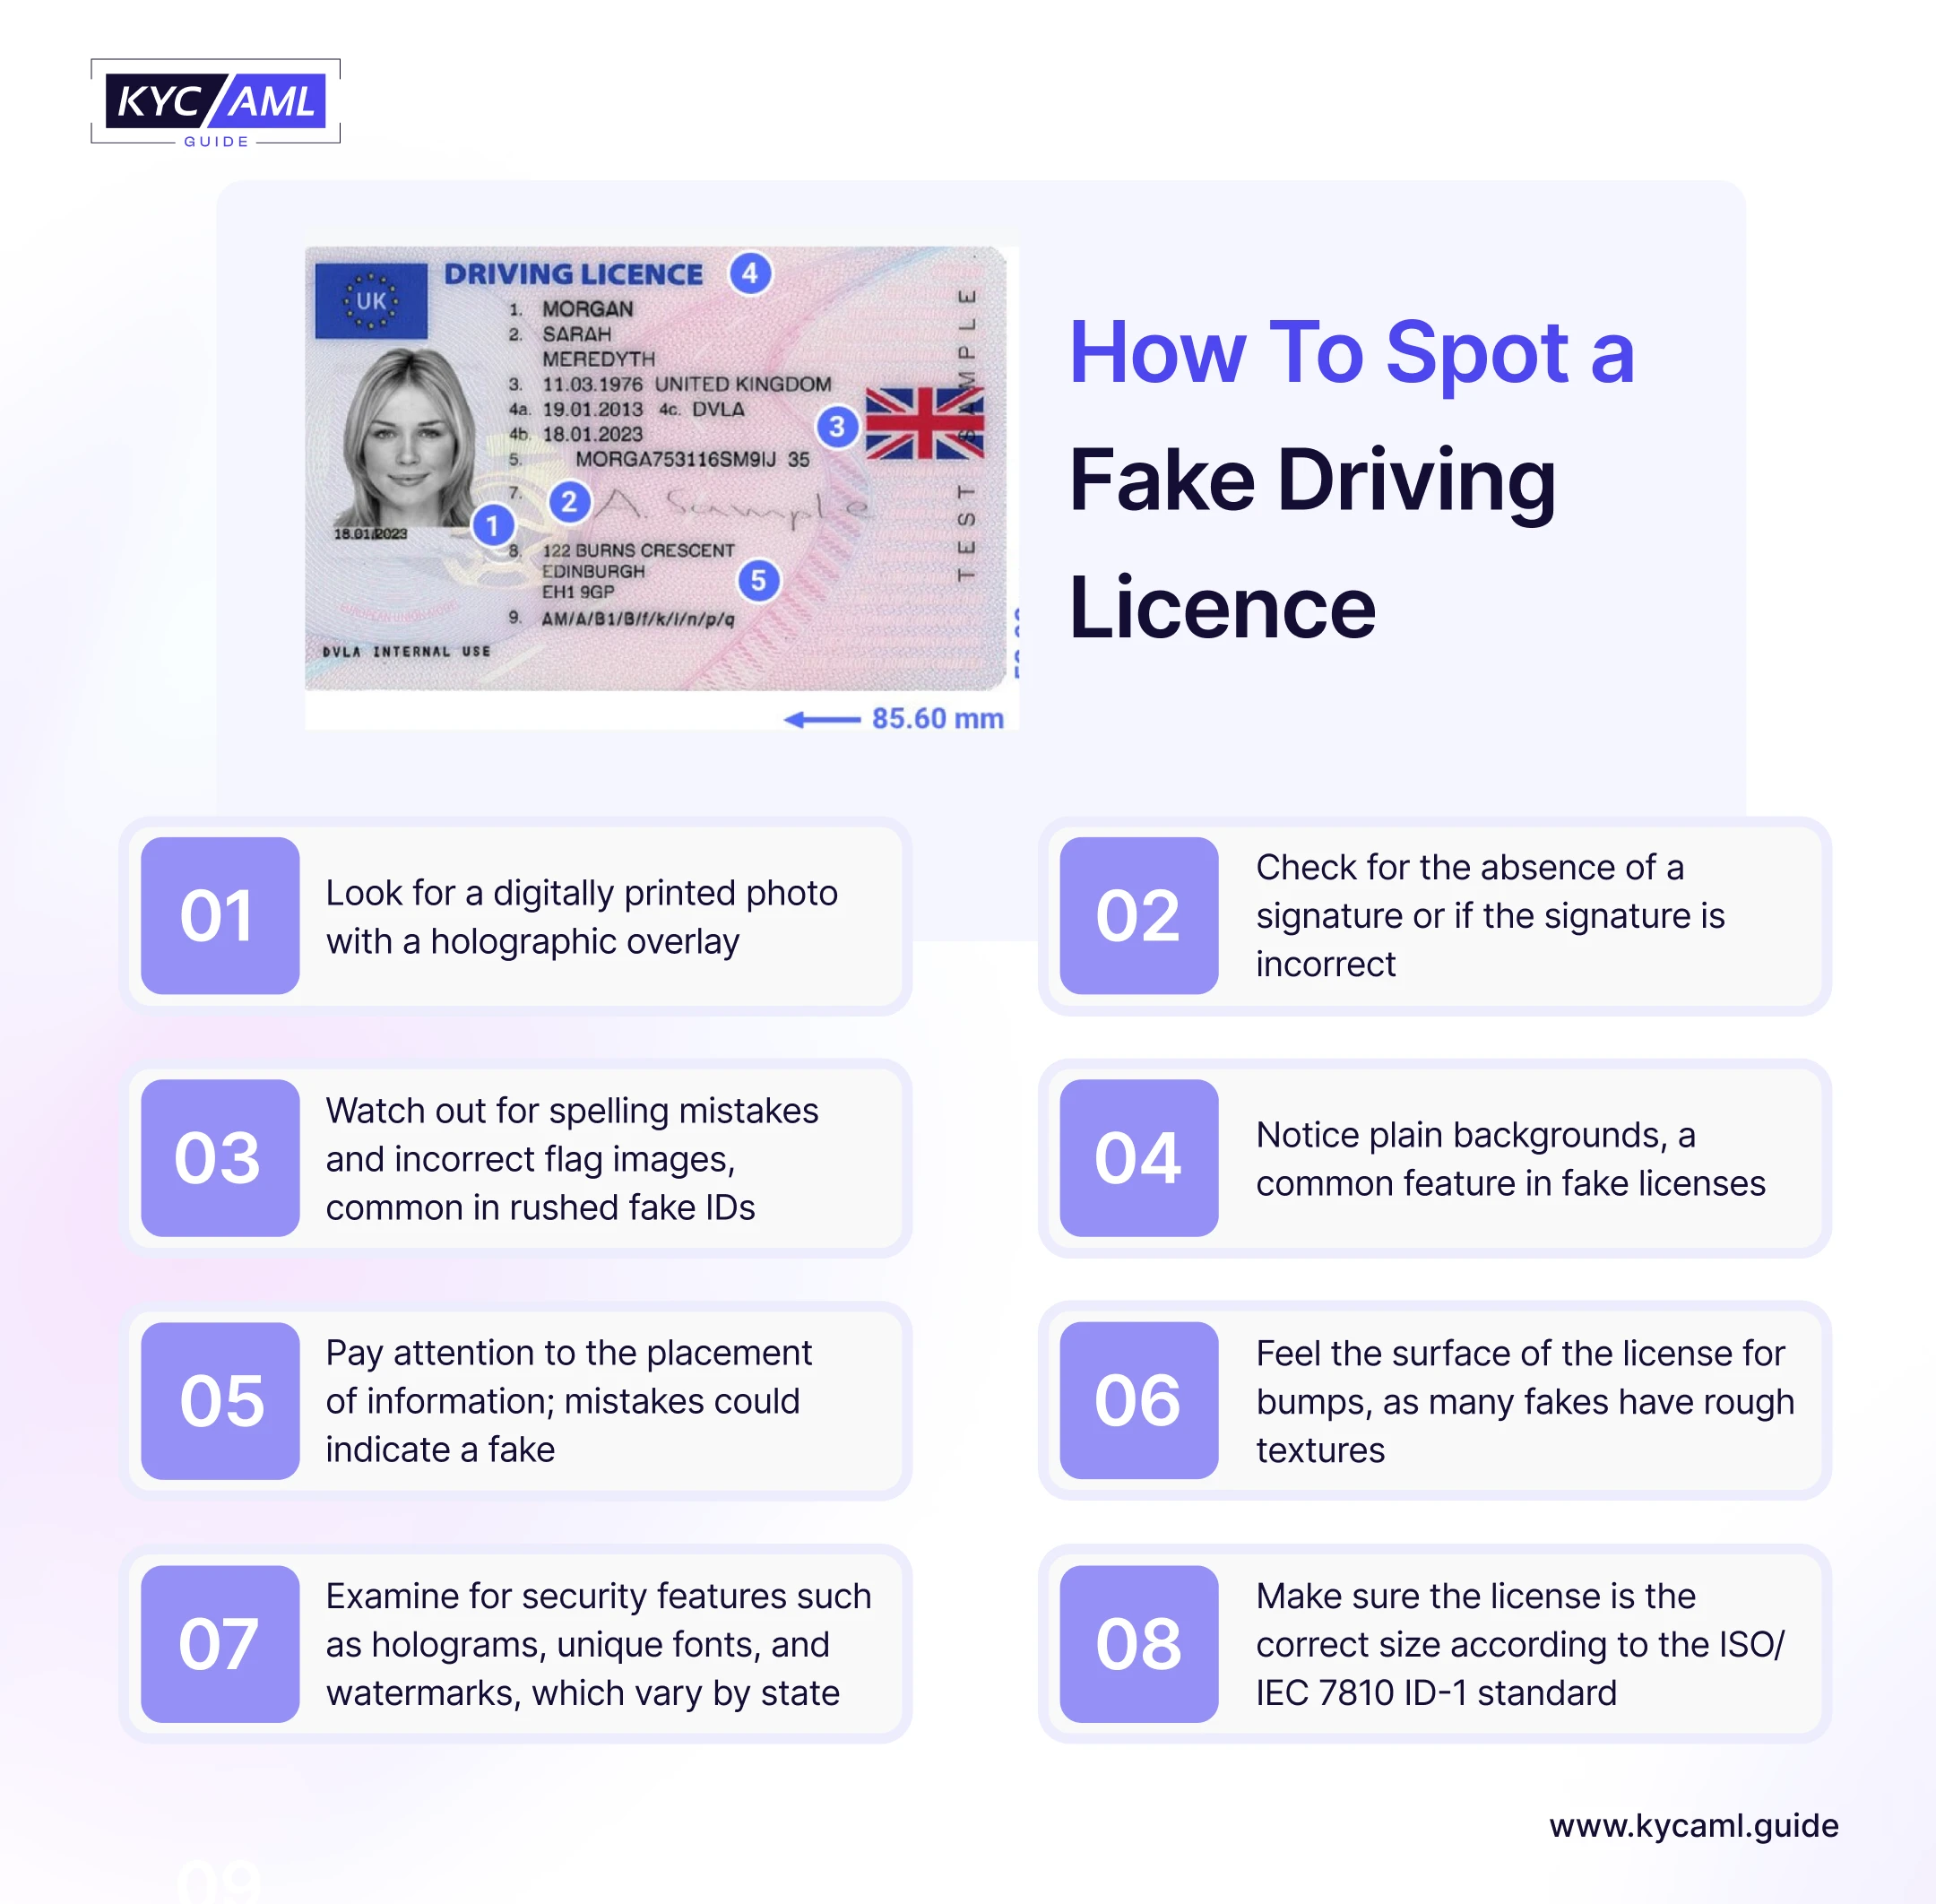 Fake driving license